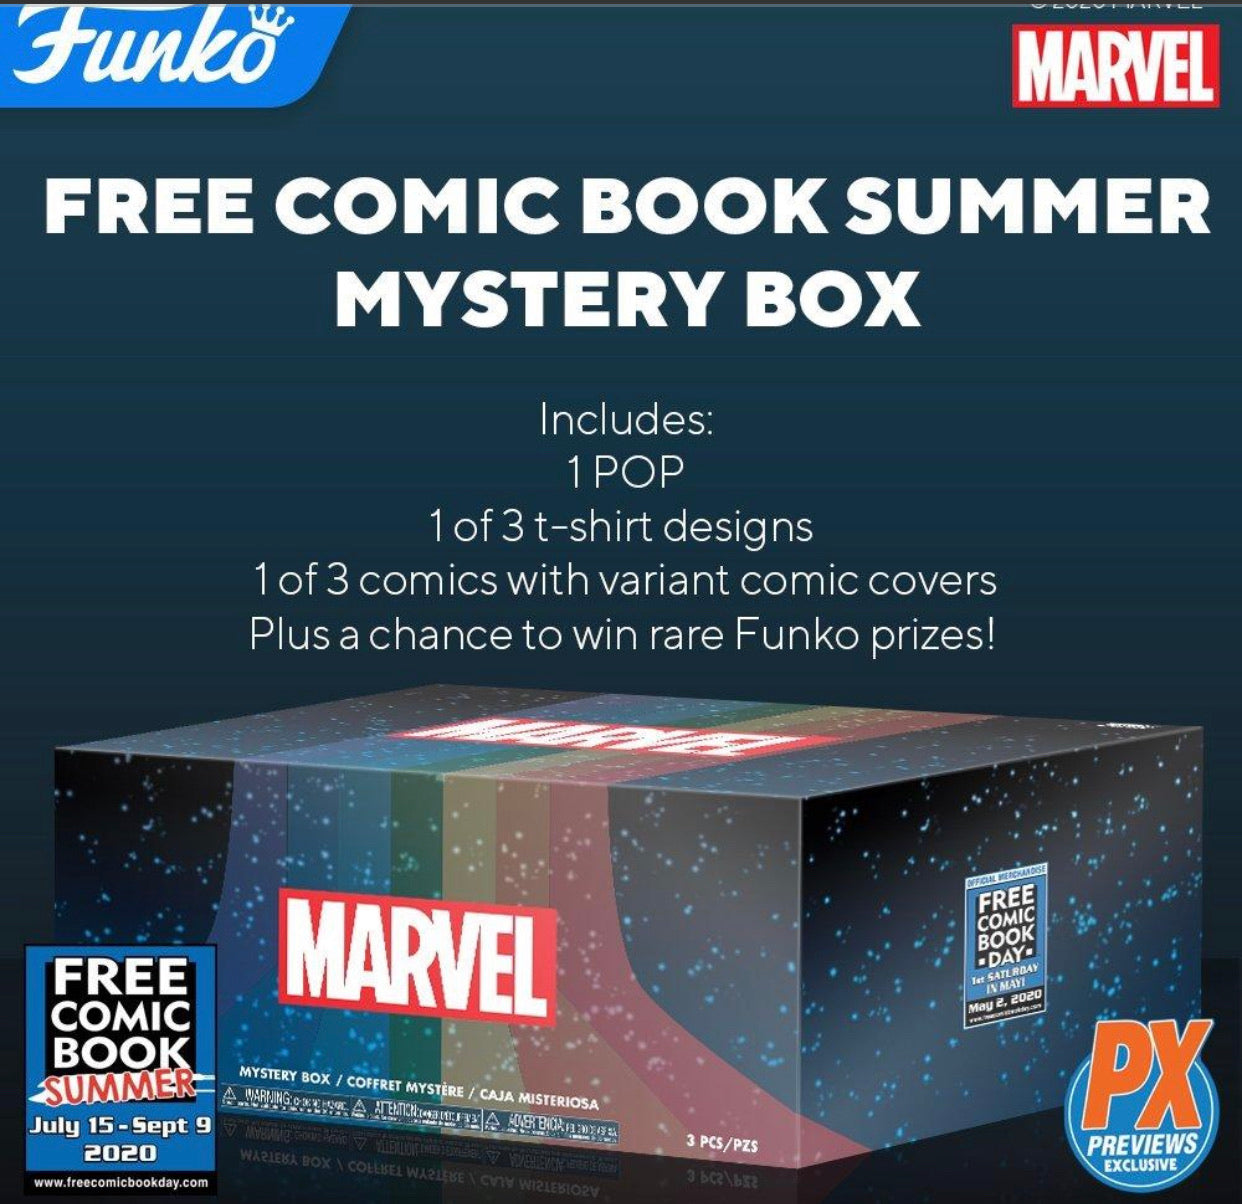 FCBD 2020 Funko PX Marvel Mystery Box(IN STOCK)